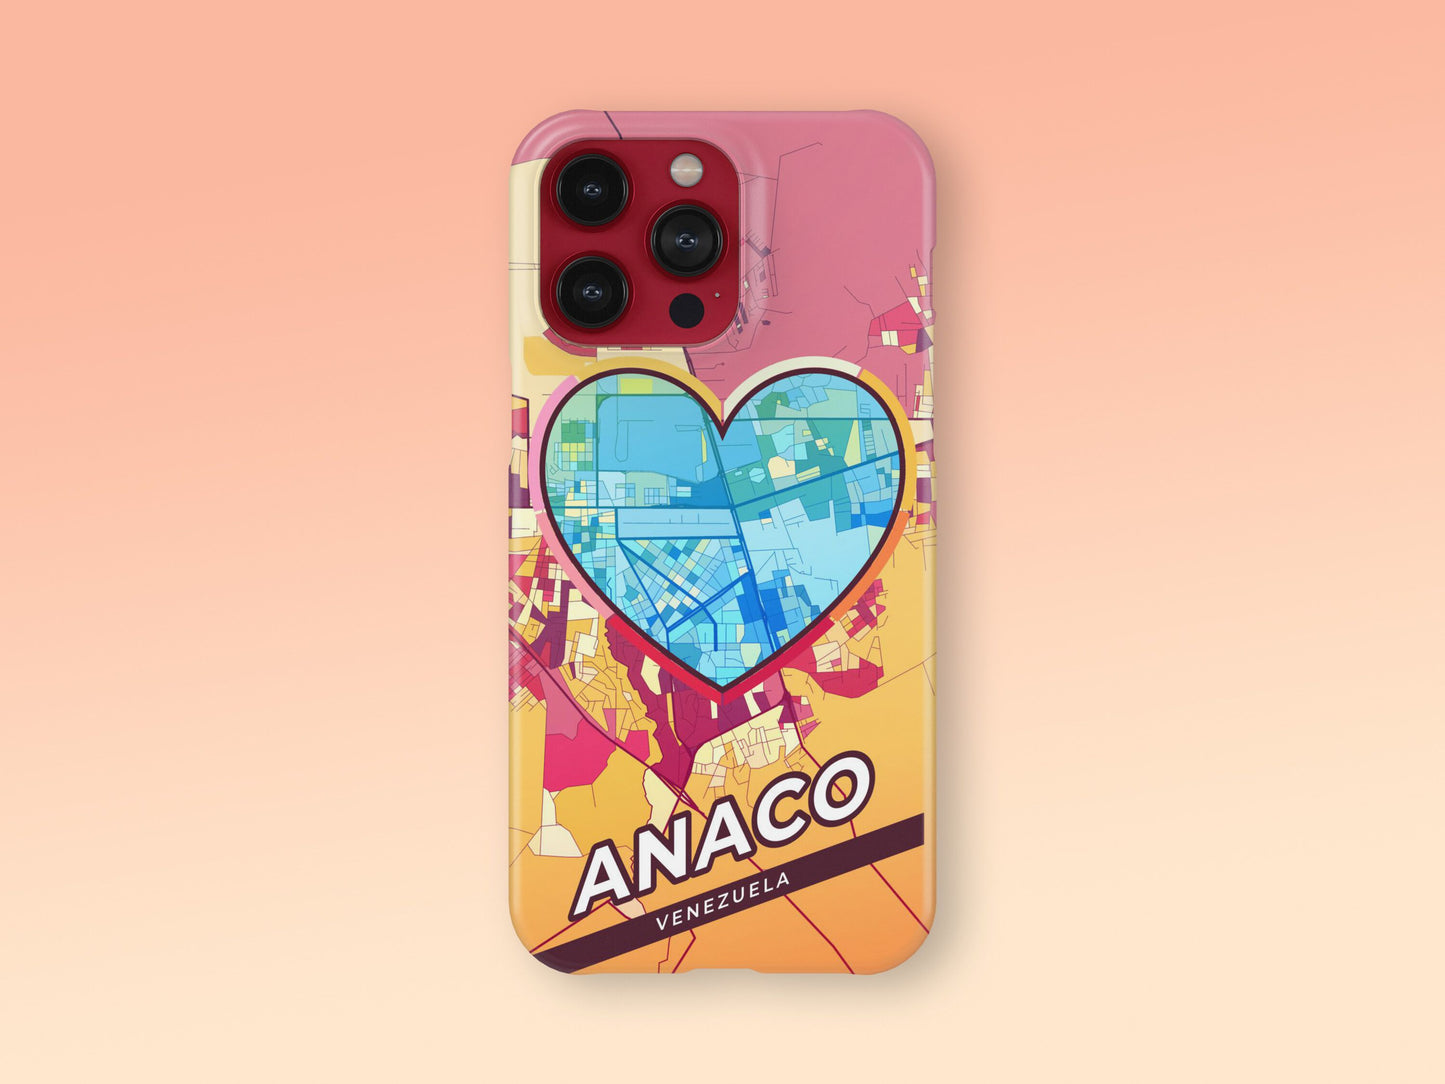 Anaco Venezuela slim phone case with colorful icon. Birthday, wedding or housewarming gift. Couple match cases. 2